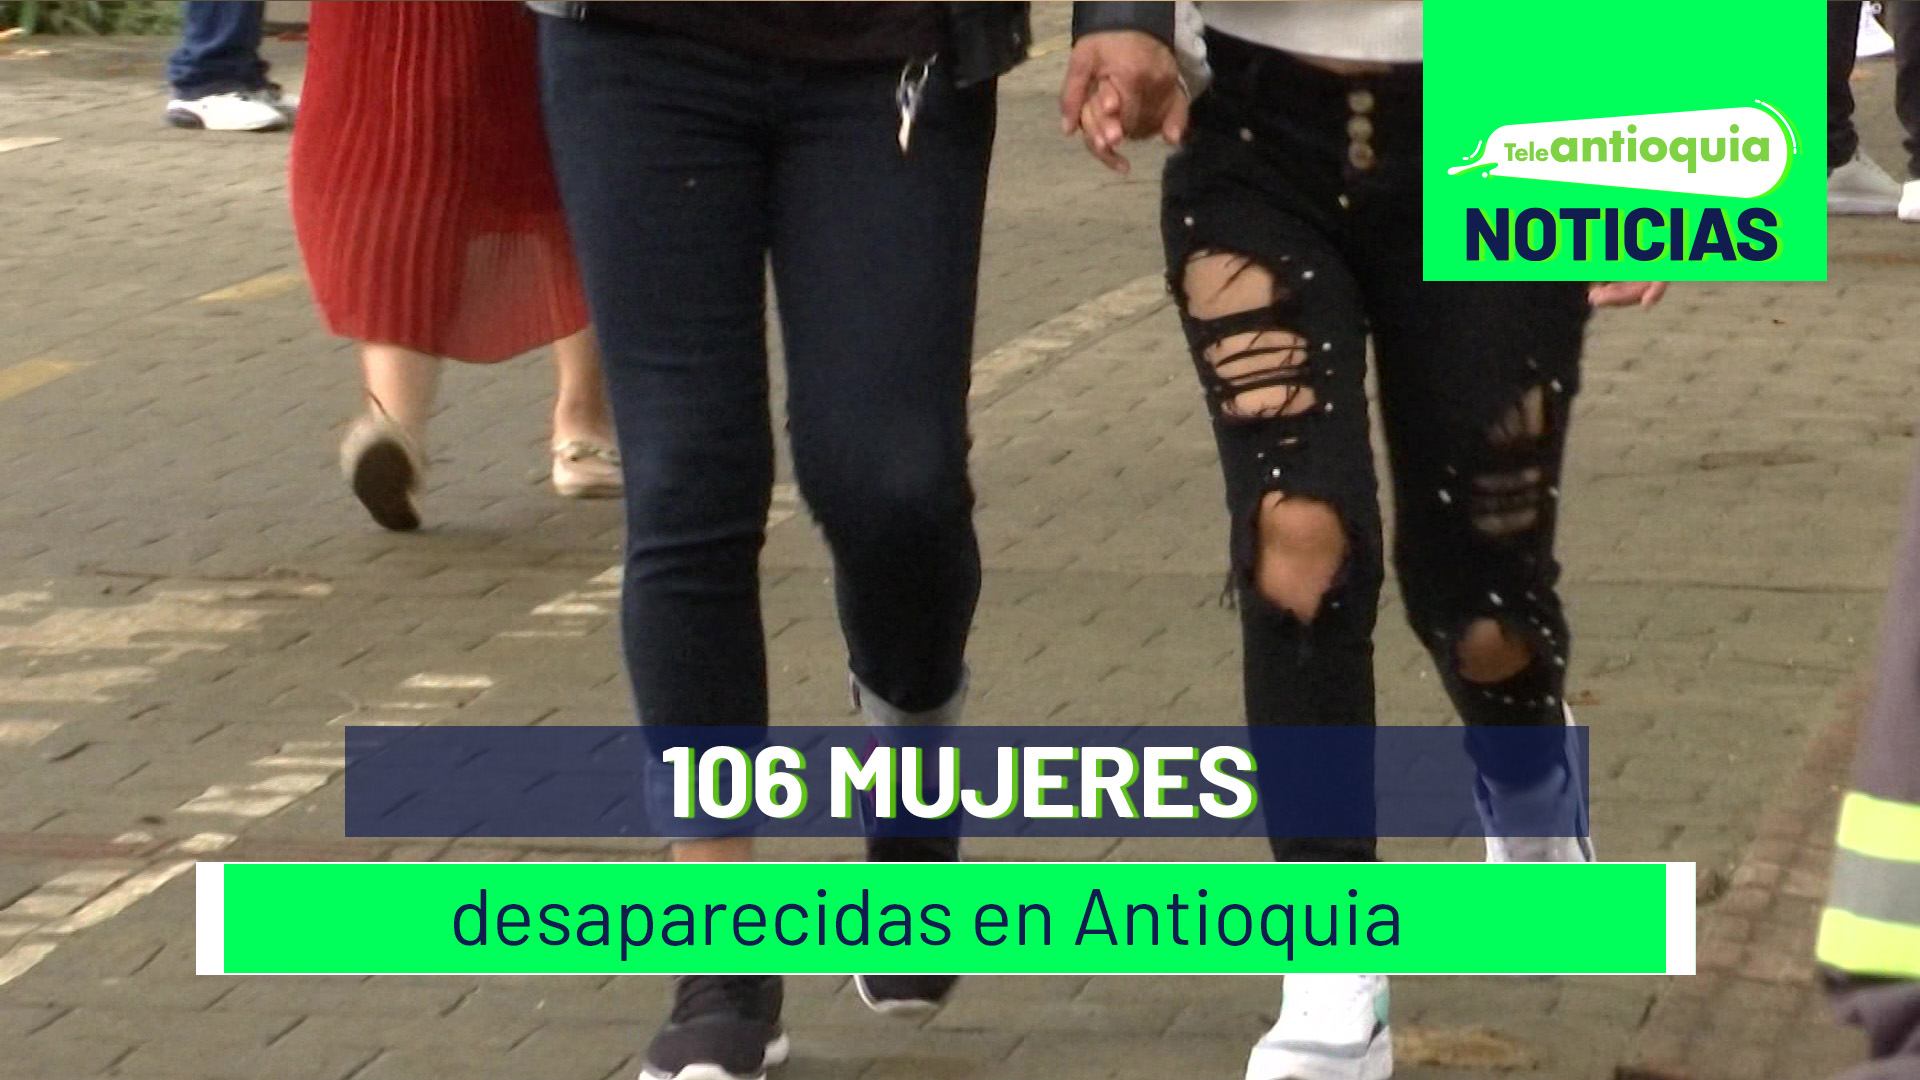 106 mujeres desaparecidas en Antioquia